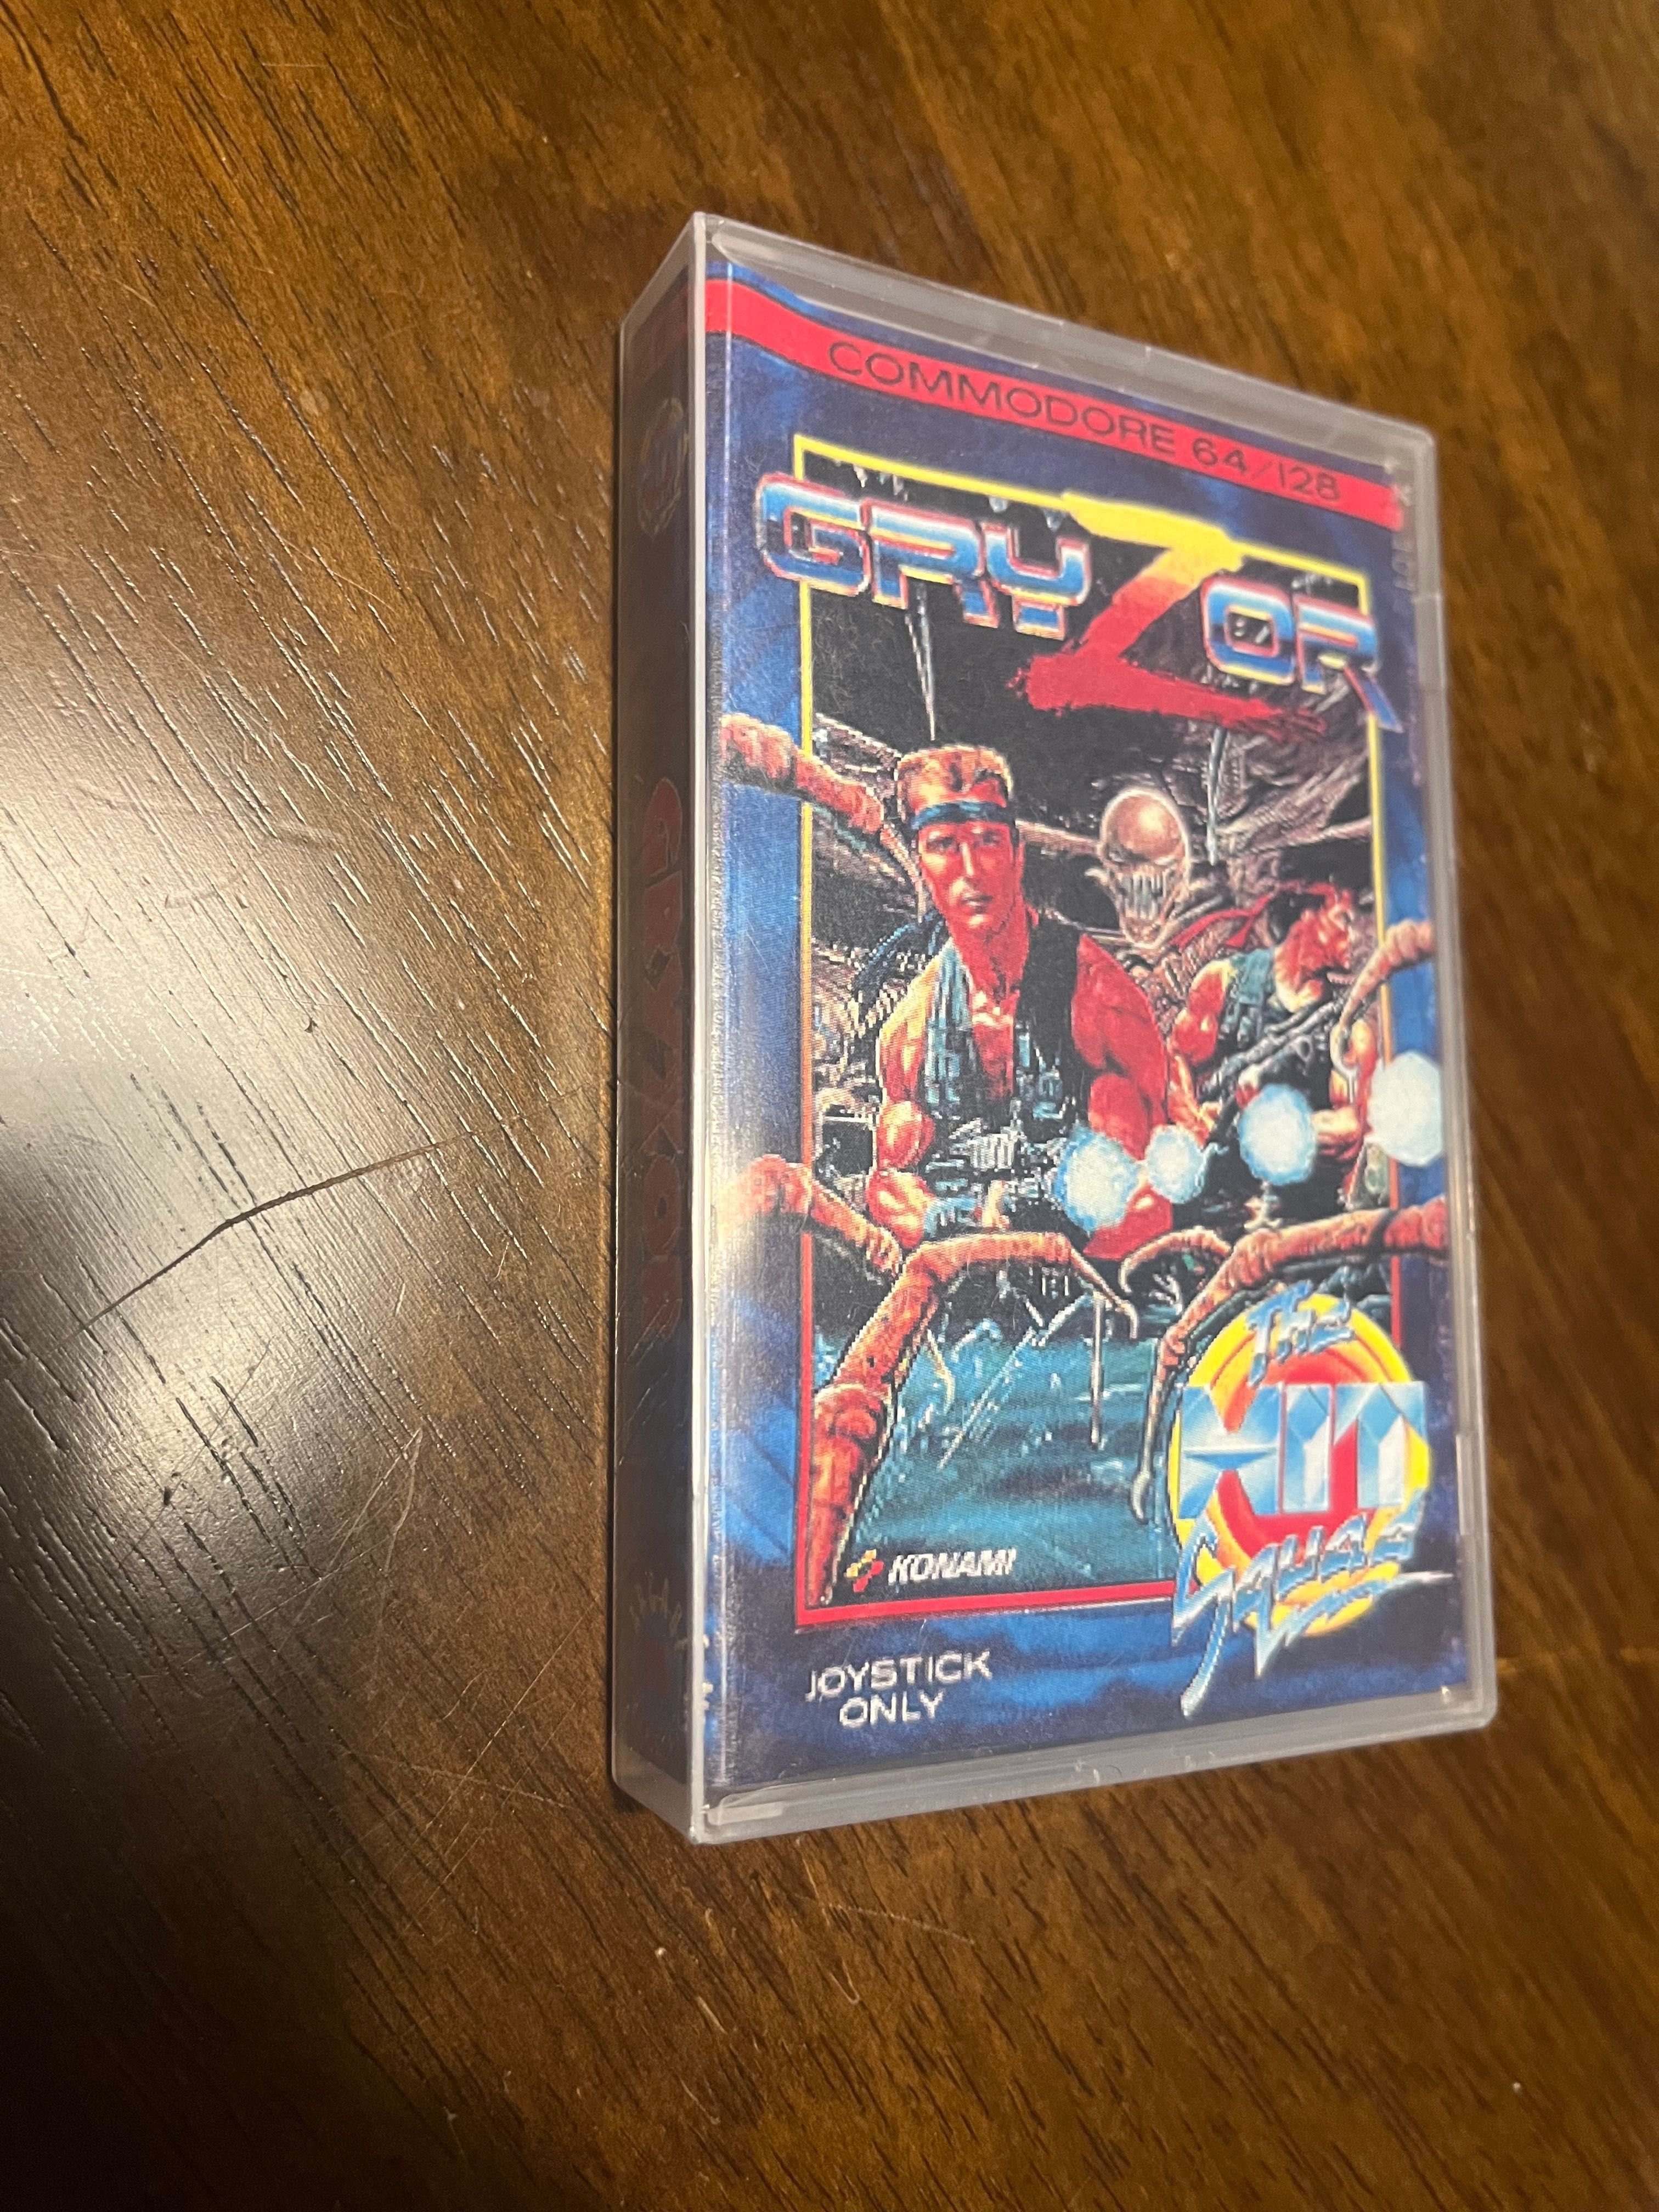 5 Cassetes Commodore 64